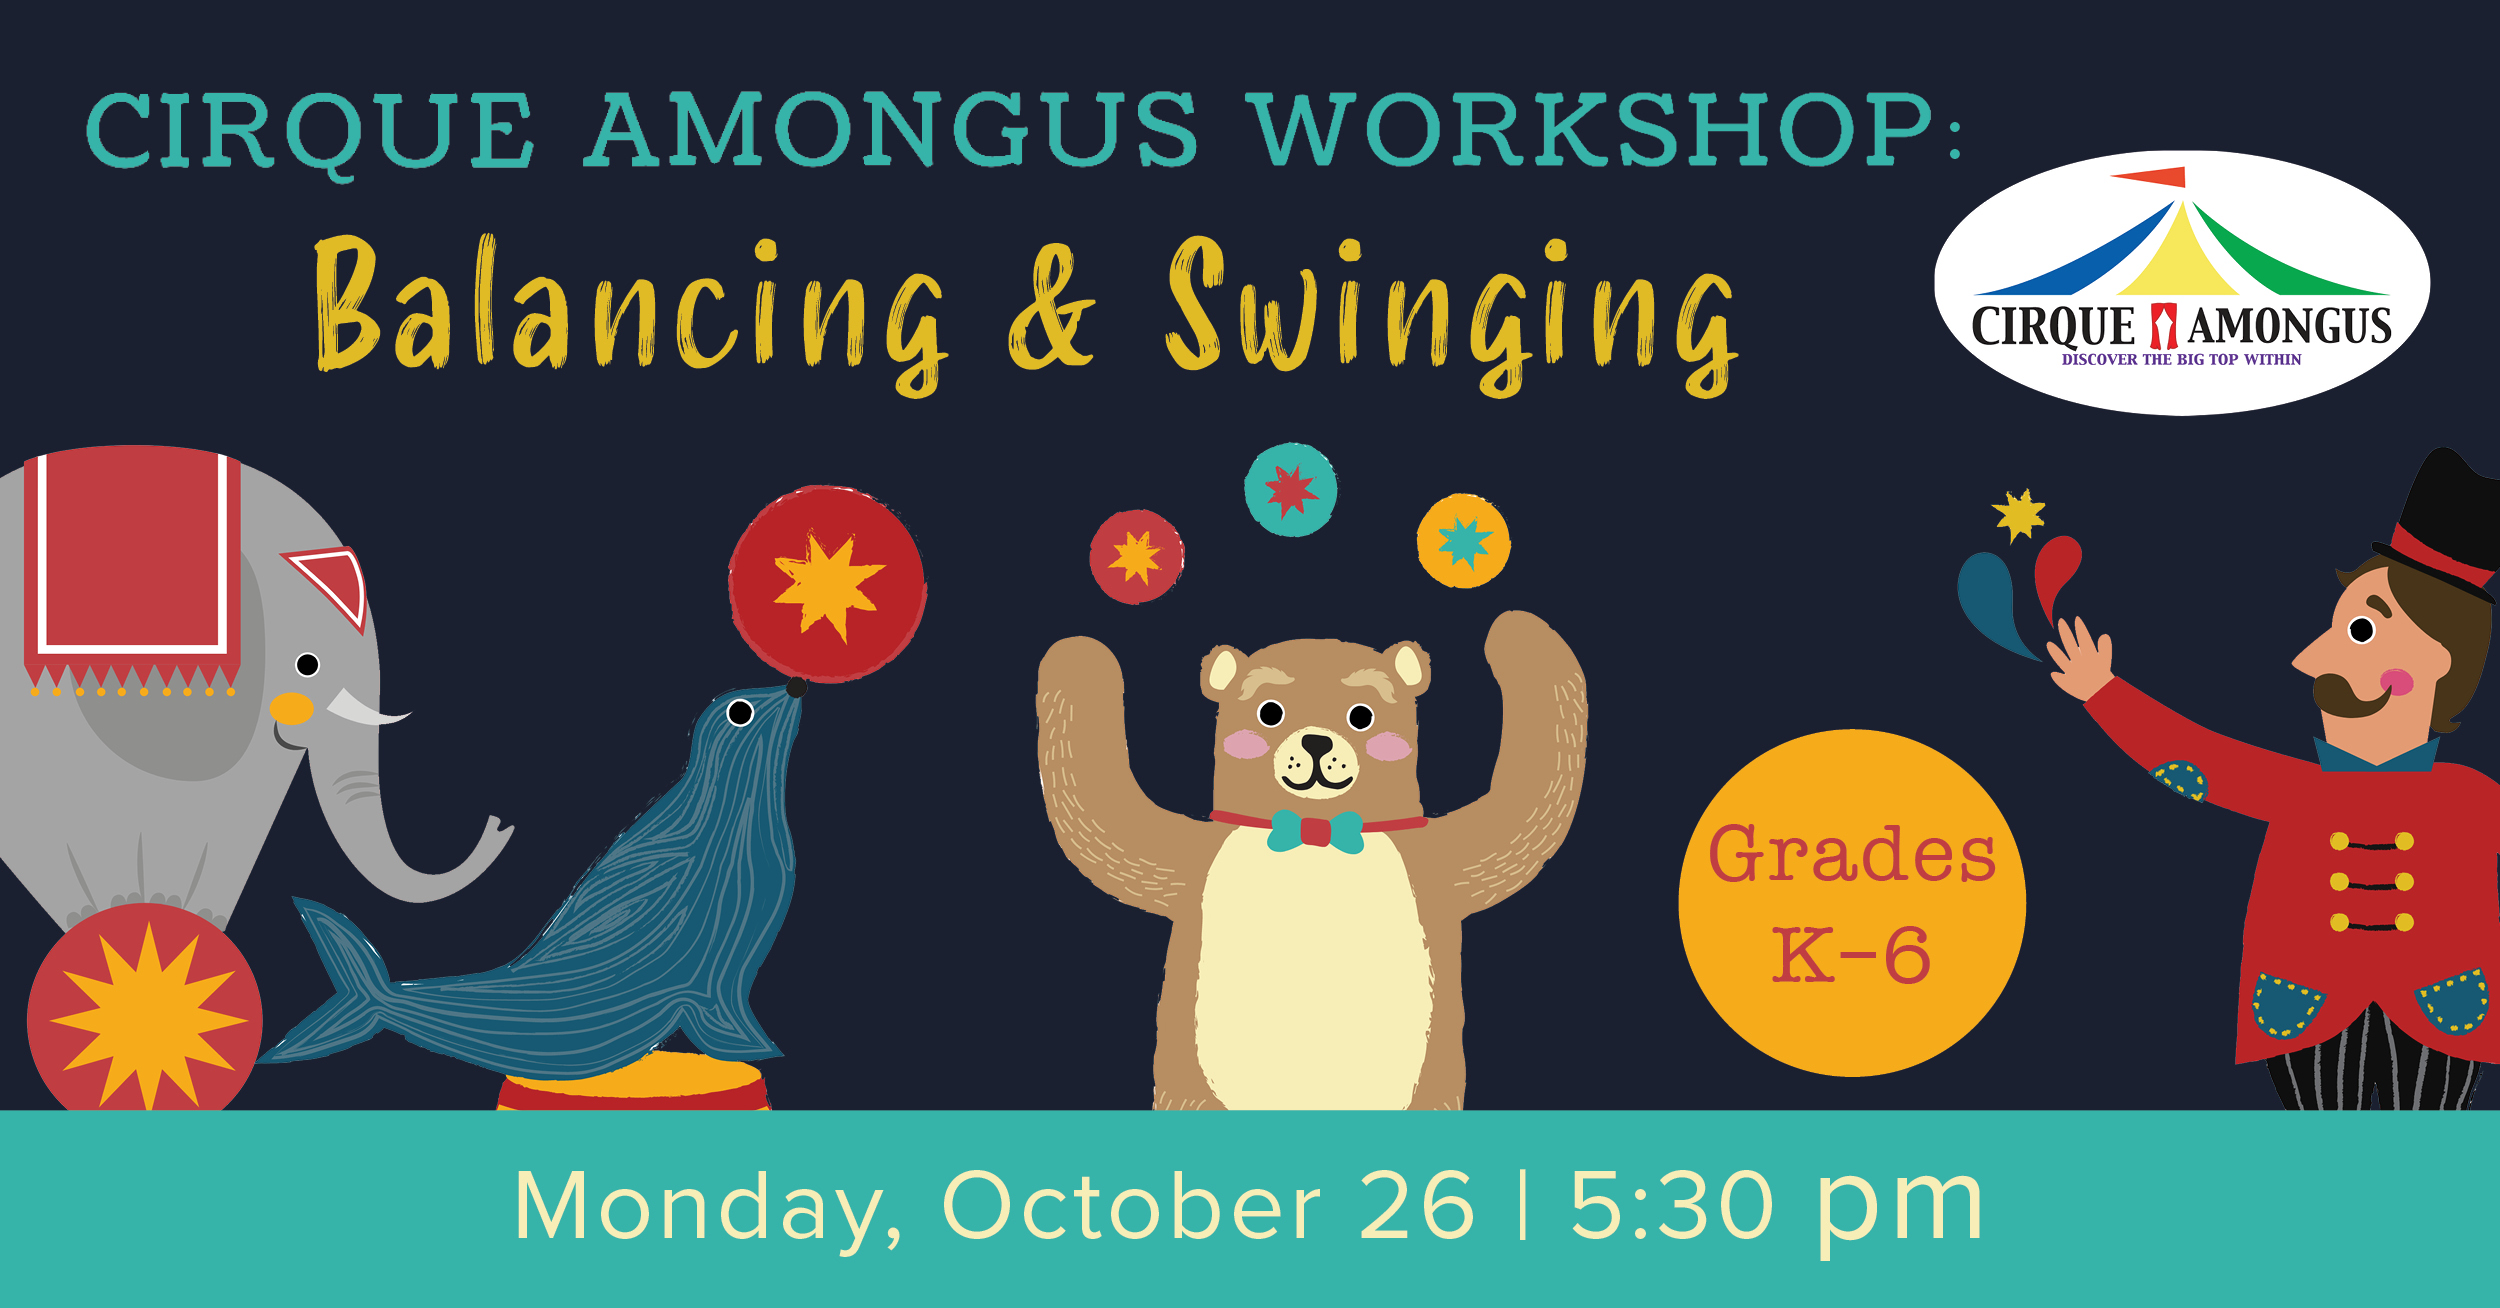 Cirque Amongus Workshop: Balancing & Swinging. Monday, October 26 at 5:30 PM.